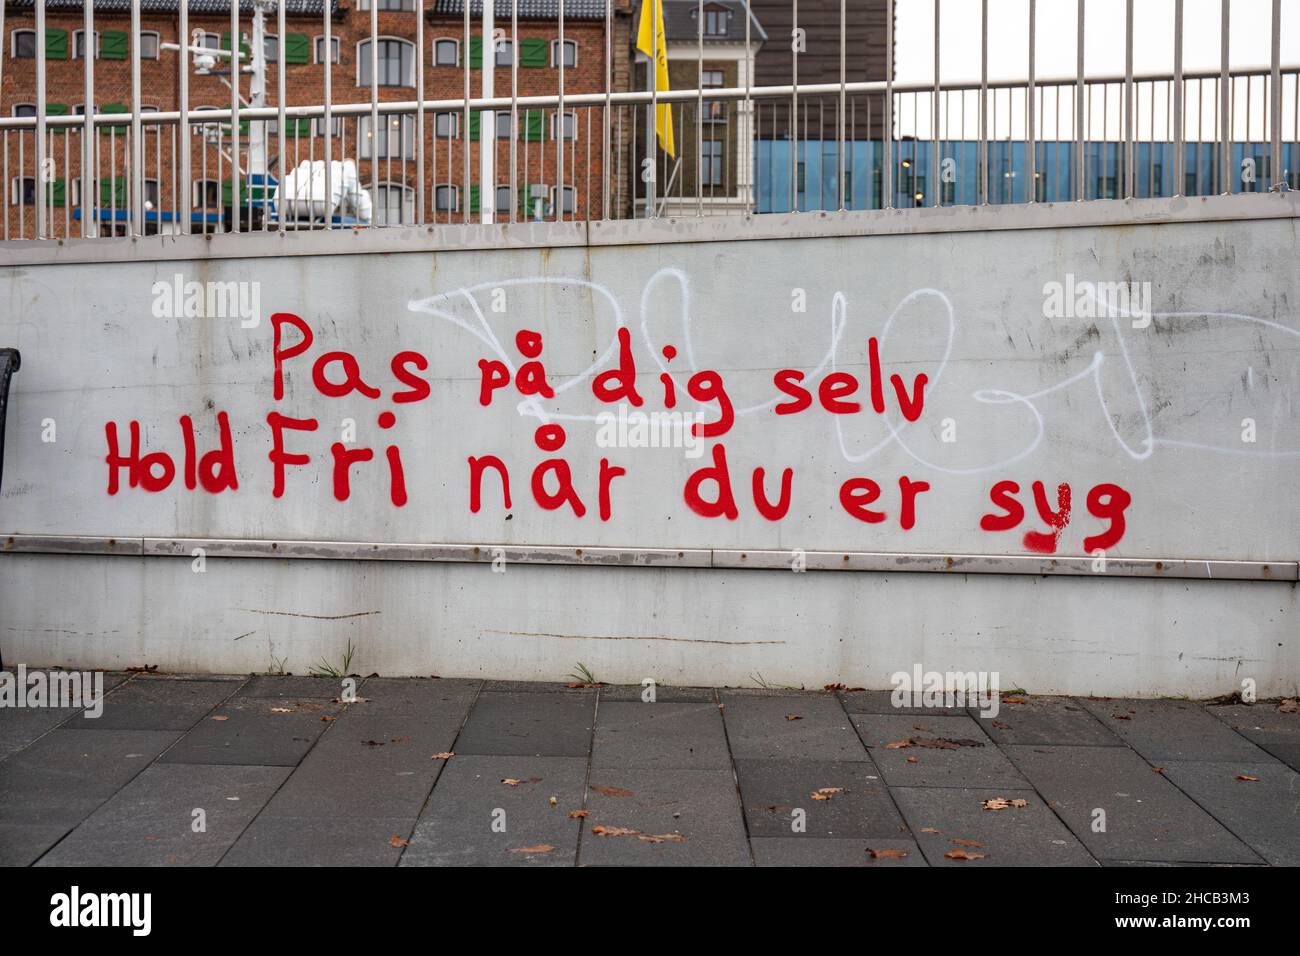 Pas på DIG selv. Halten sie fr når du er syg. Graffiti im Stadtteil Gammelholm in Kopenhagen, Dänemark. Stockfoto